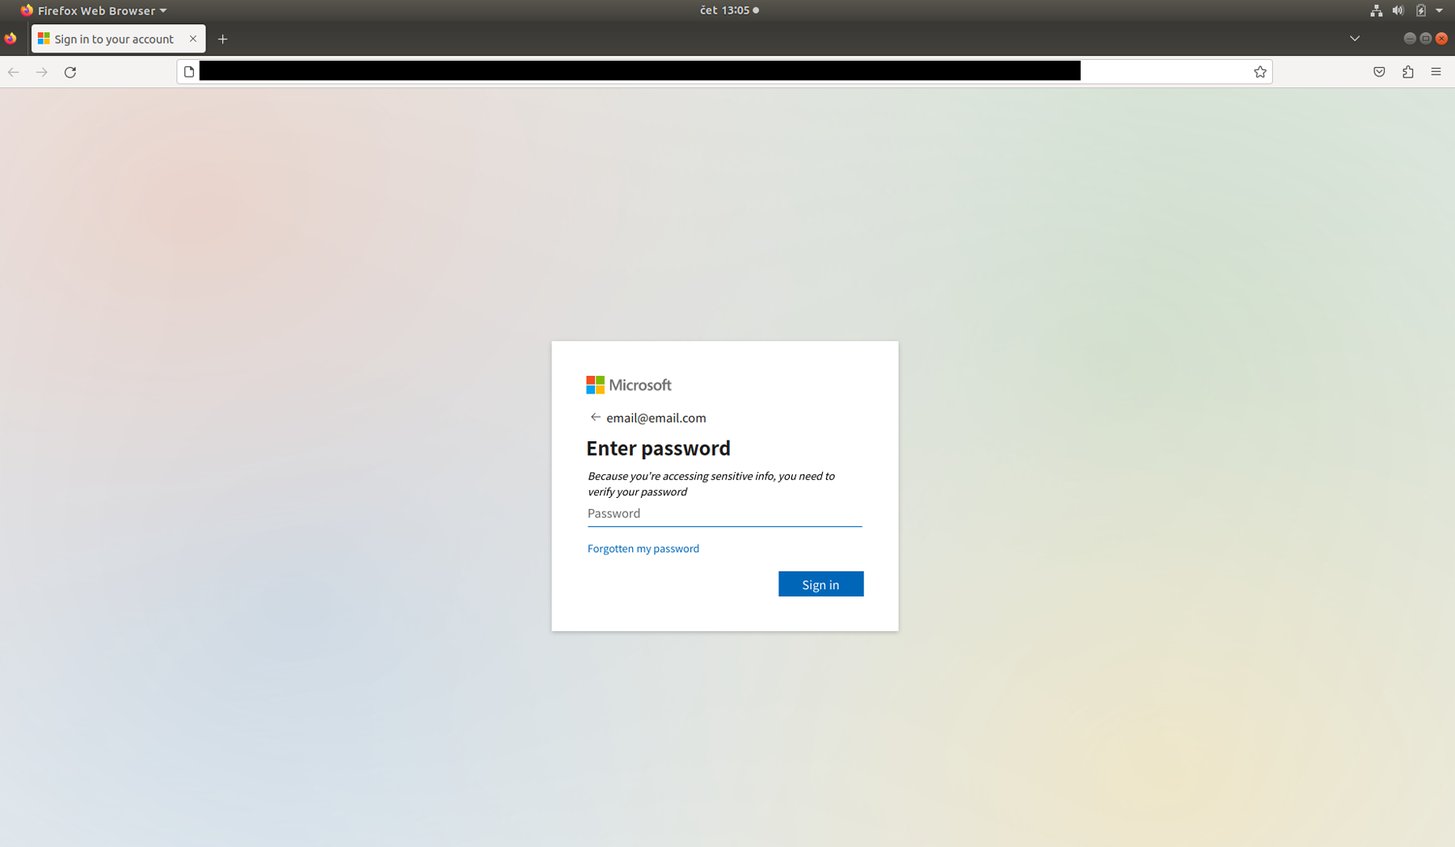 Fake Microsoft login form